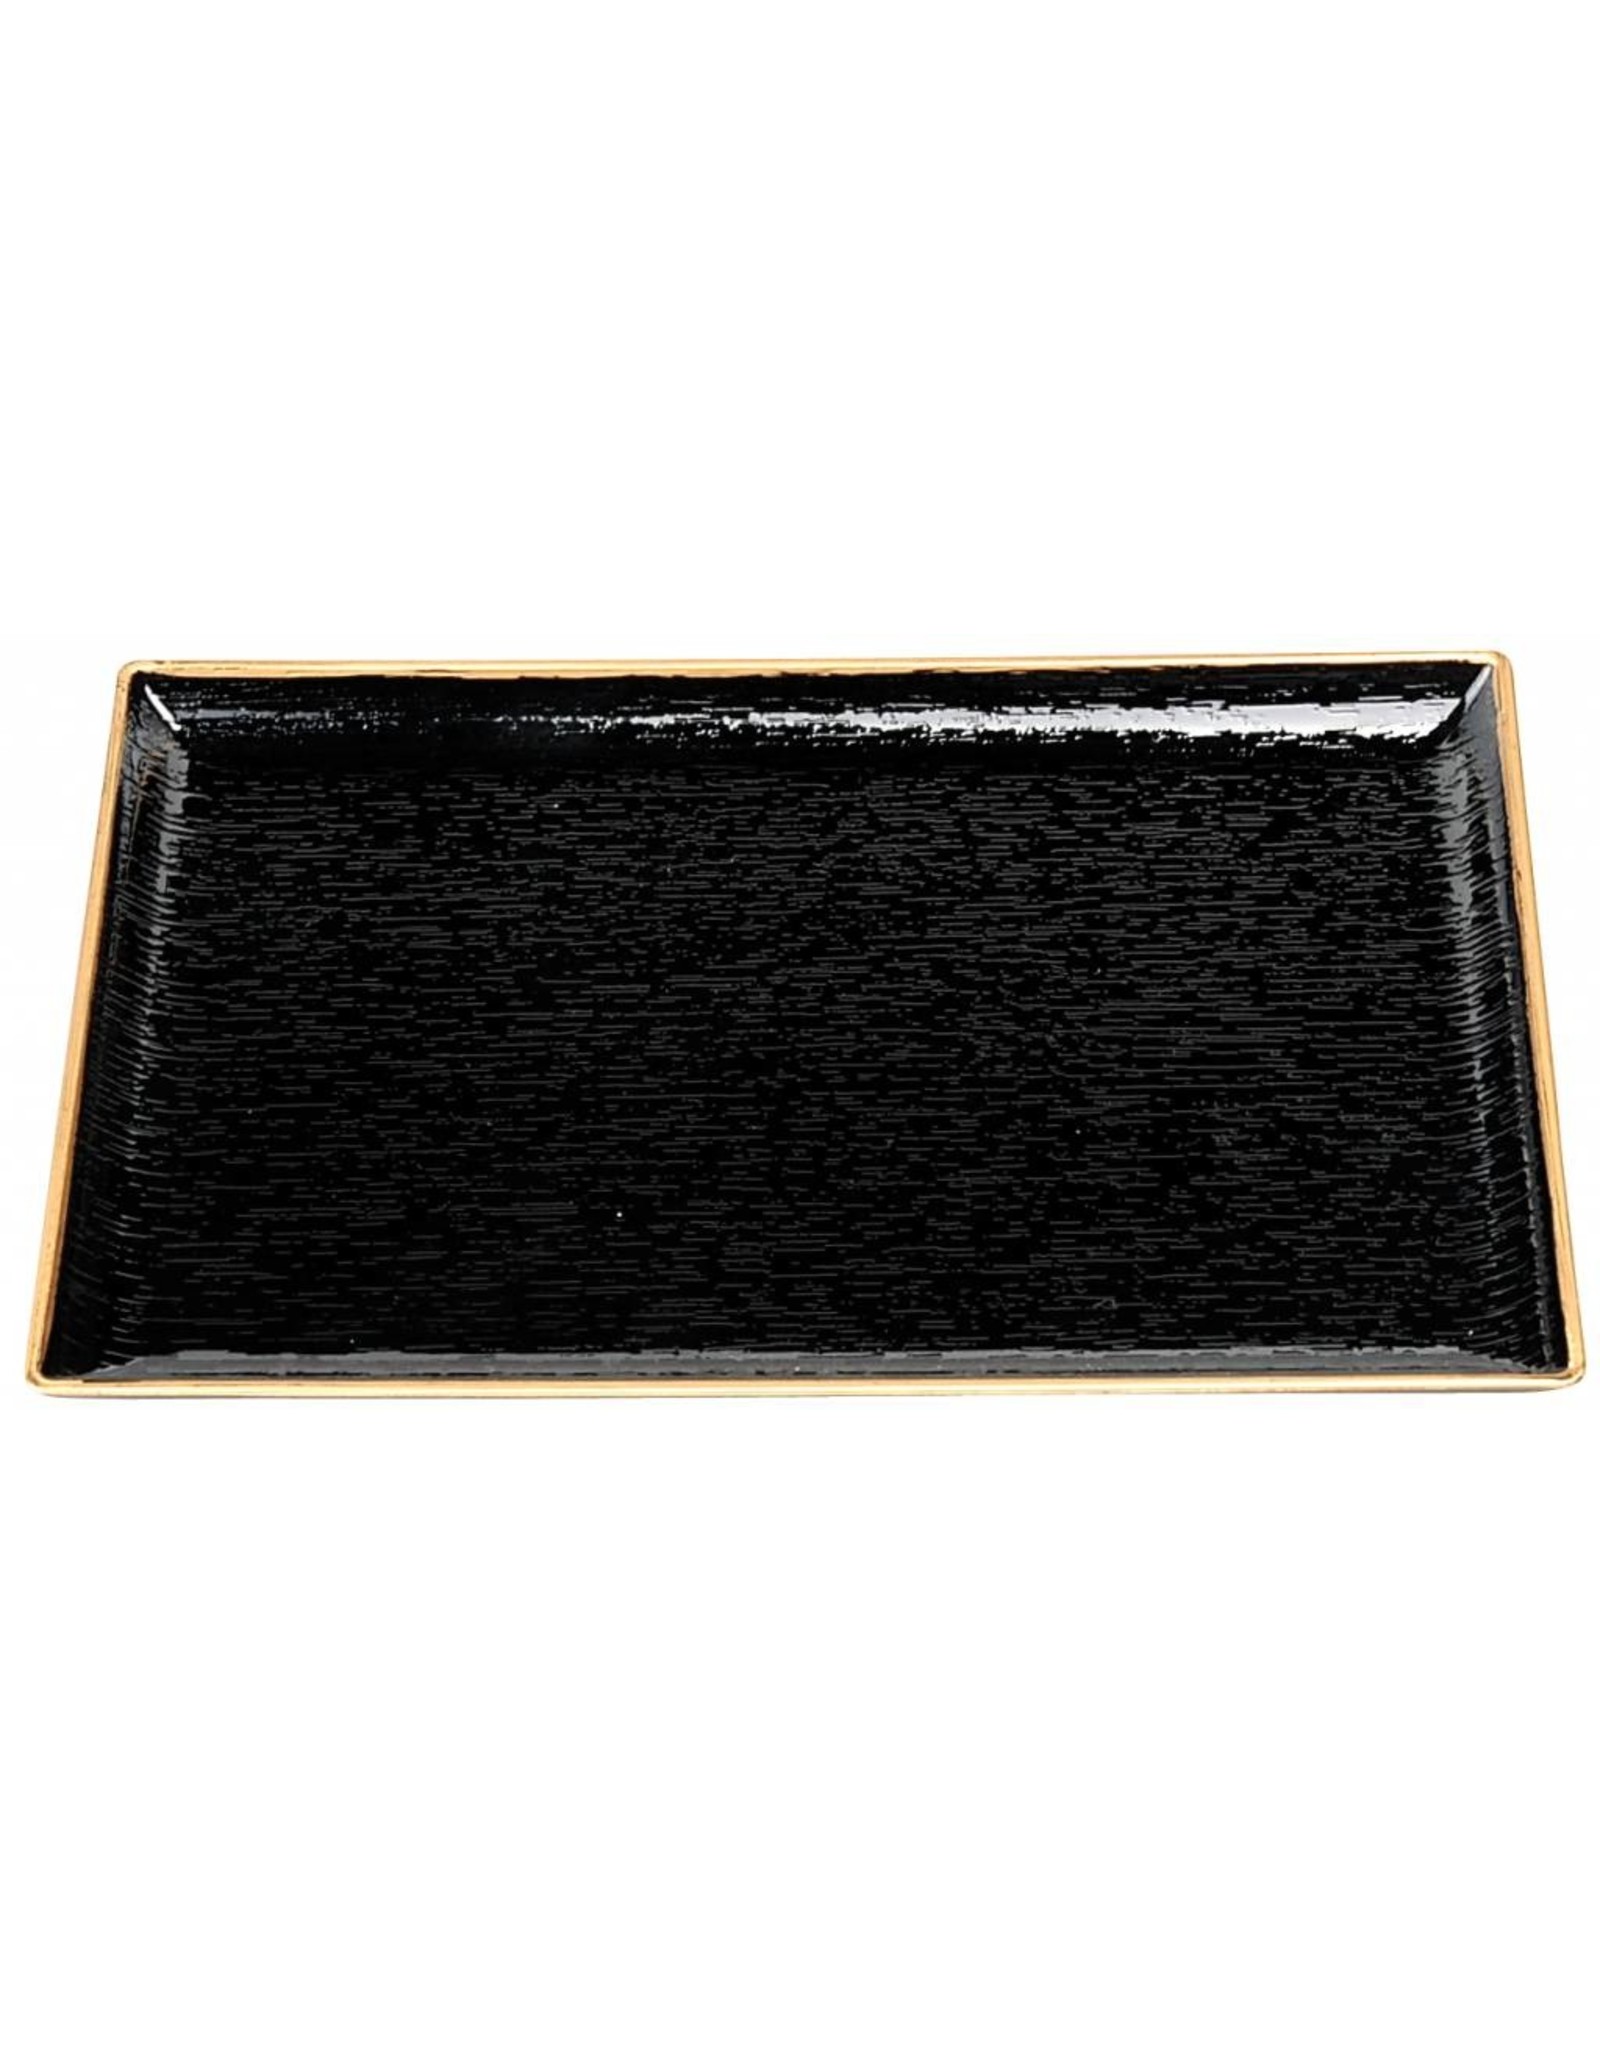 Tokyo Design Studio ABS Lacquerware dish 19x14cm black